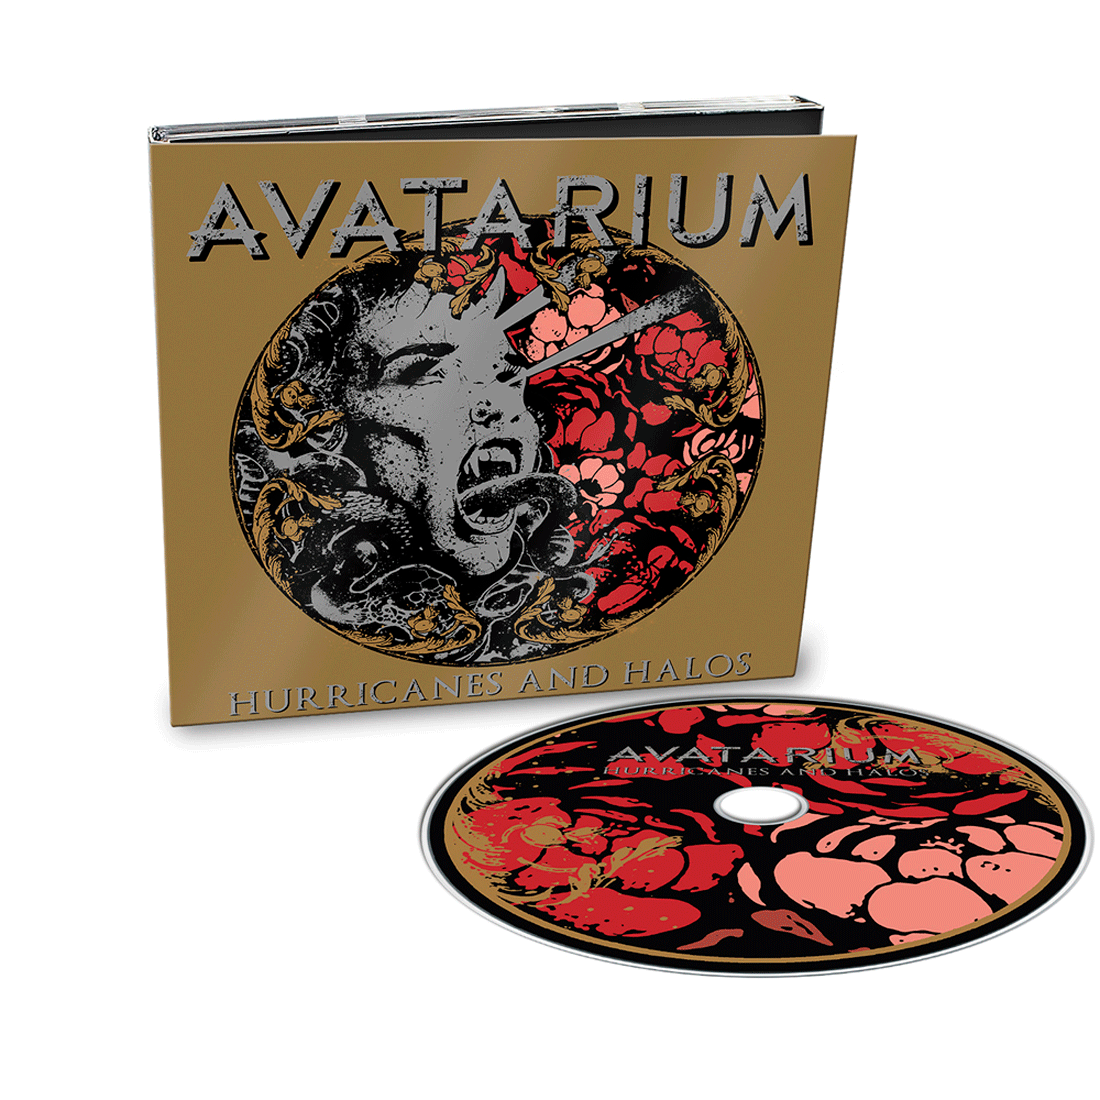 Avatarium - Hurricanes And Halos: Limited Edition CD